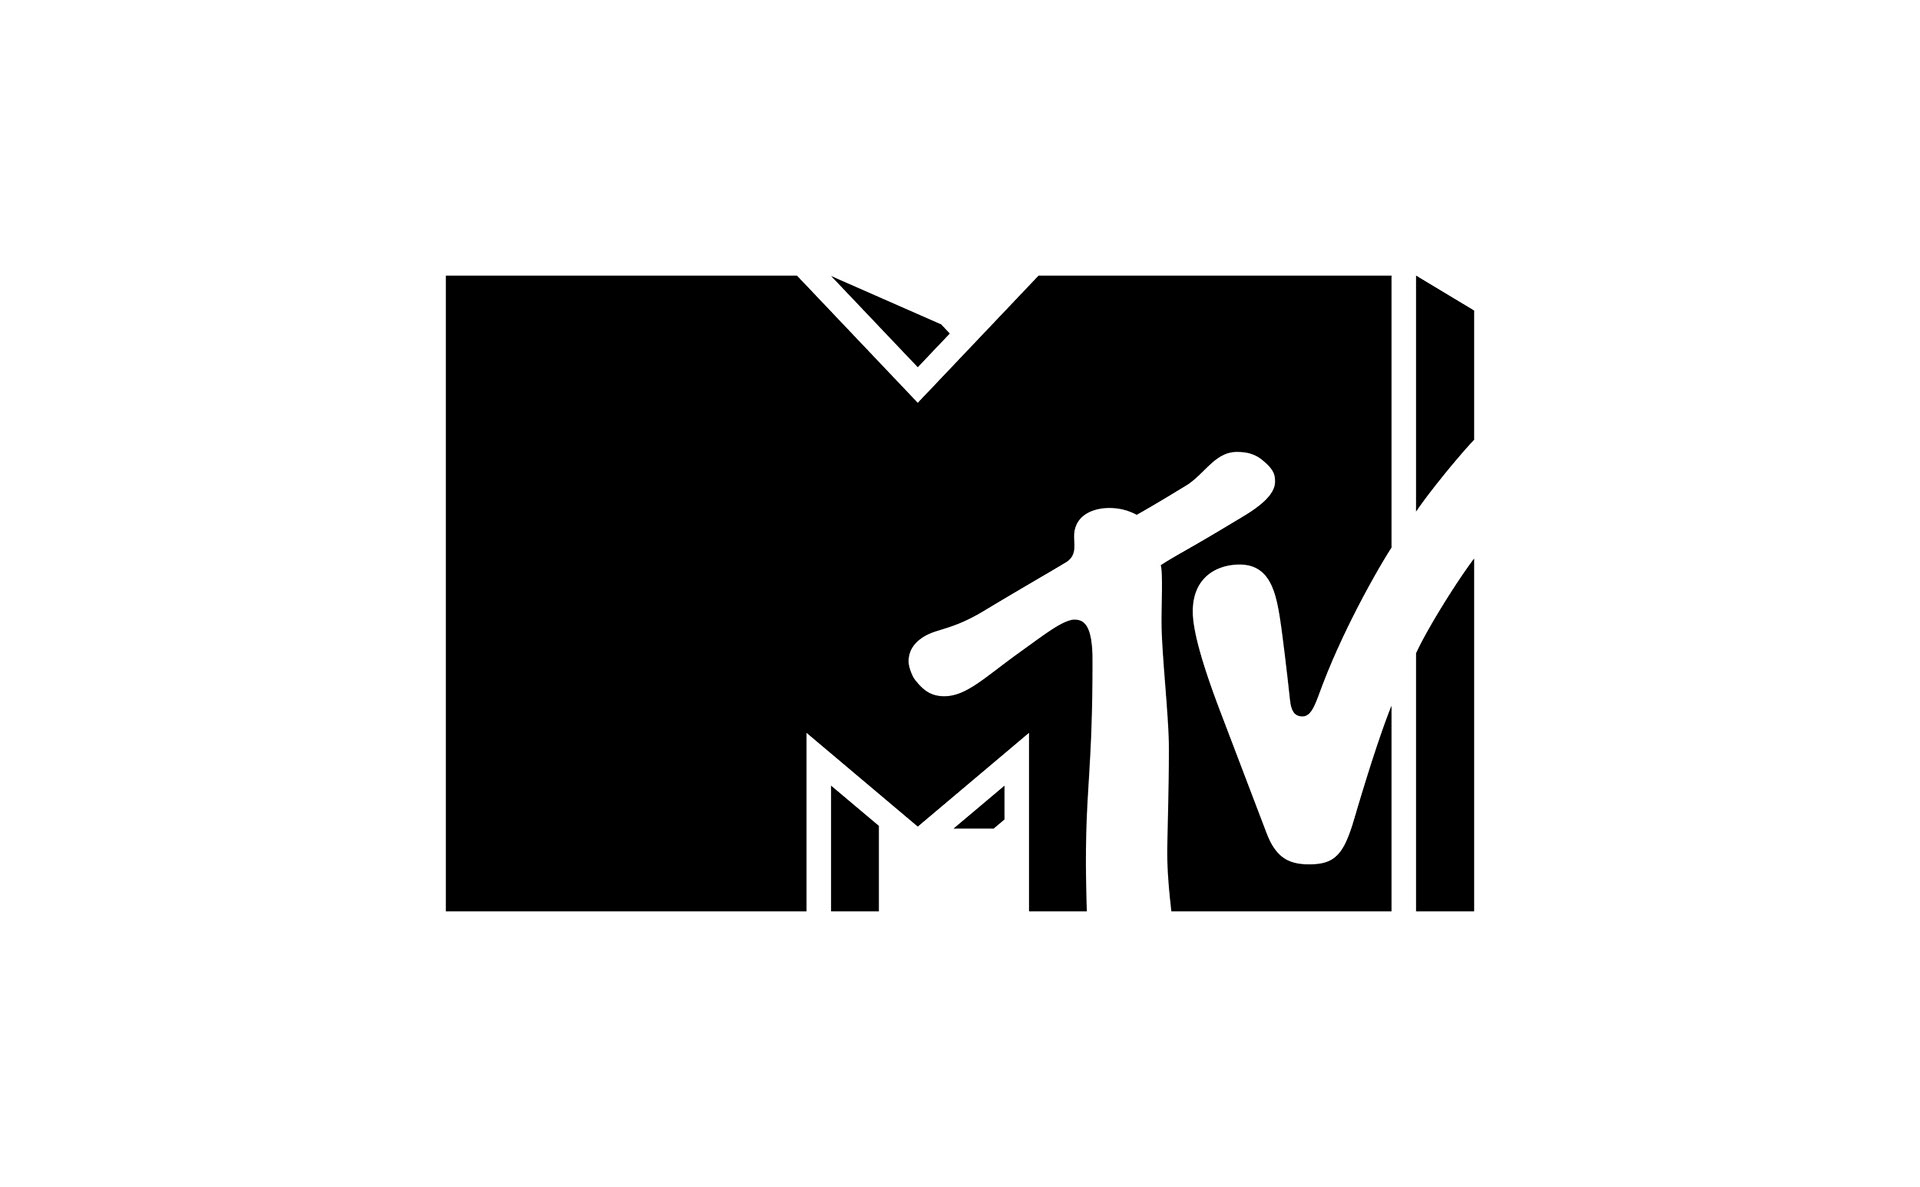 mtv networks logo